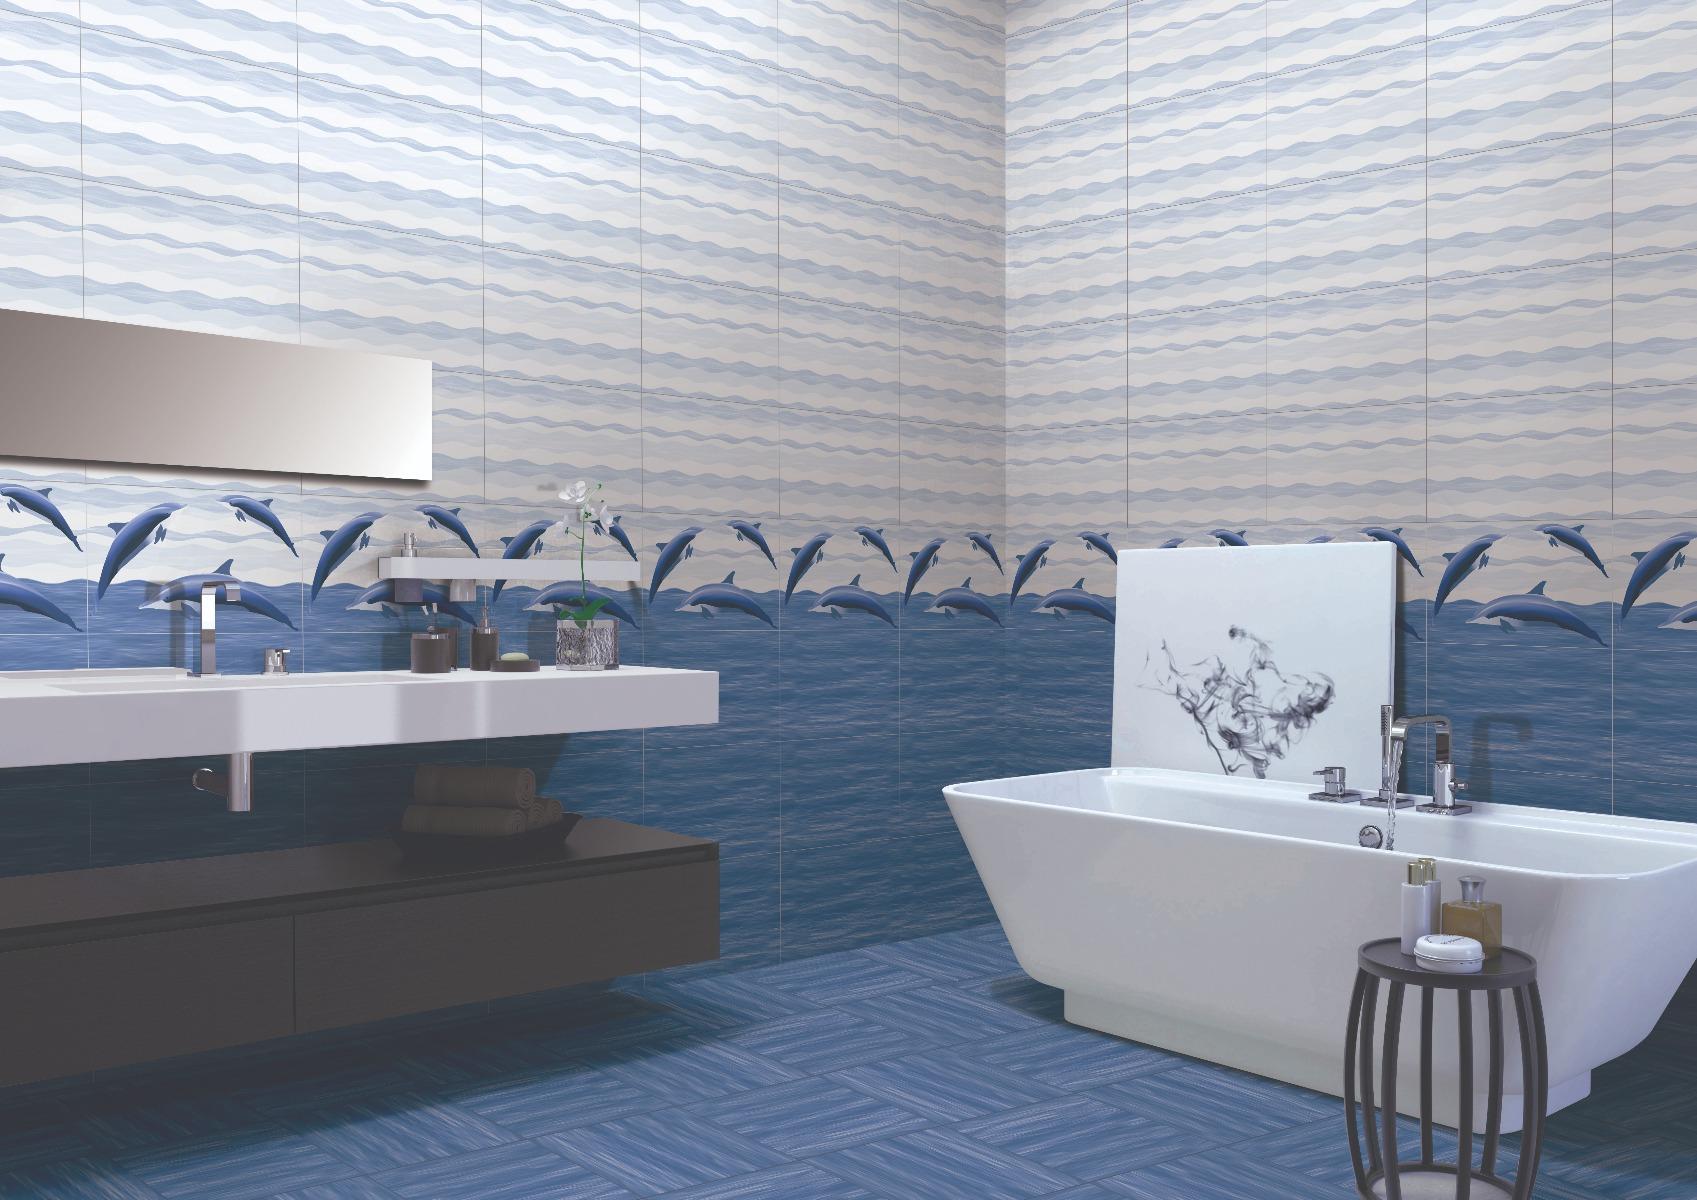 Digital Tiles for Bathroom Tiles